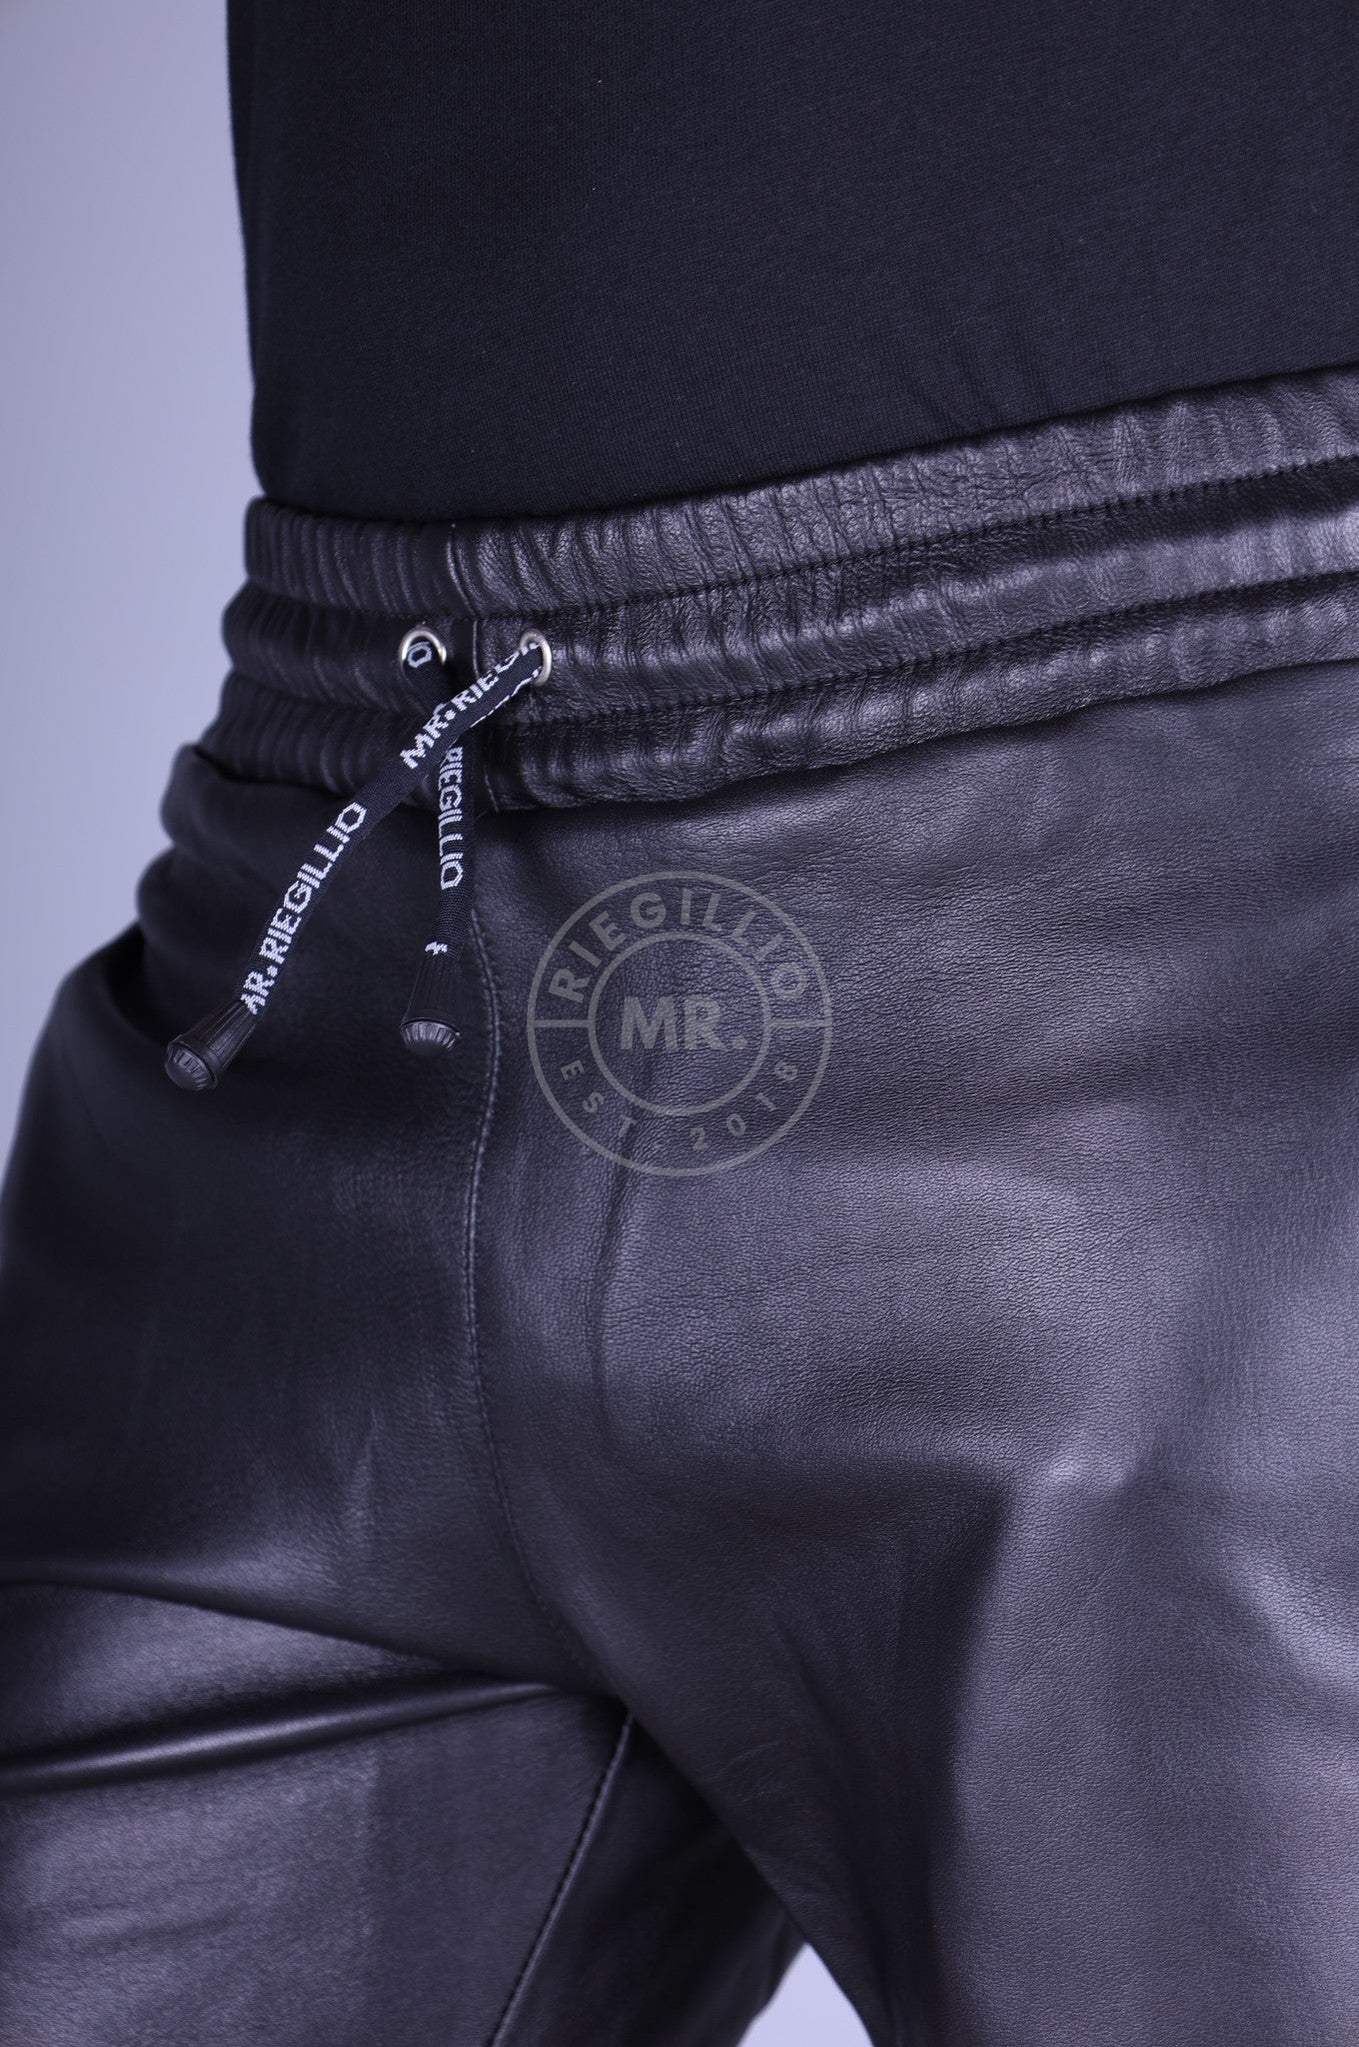 Black Leather Button Down Pants at MR. Riegillio